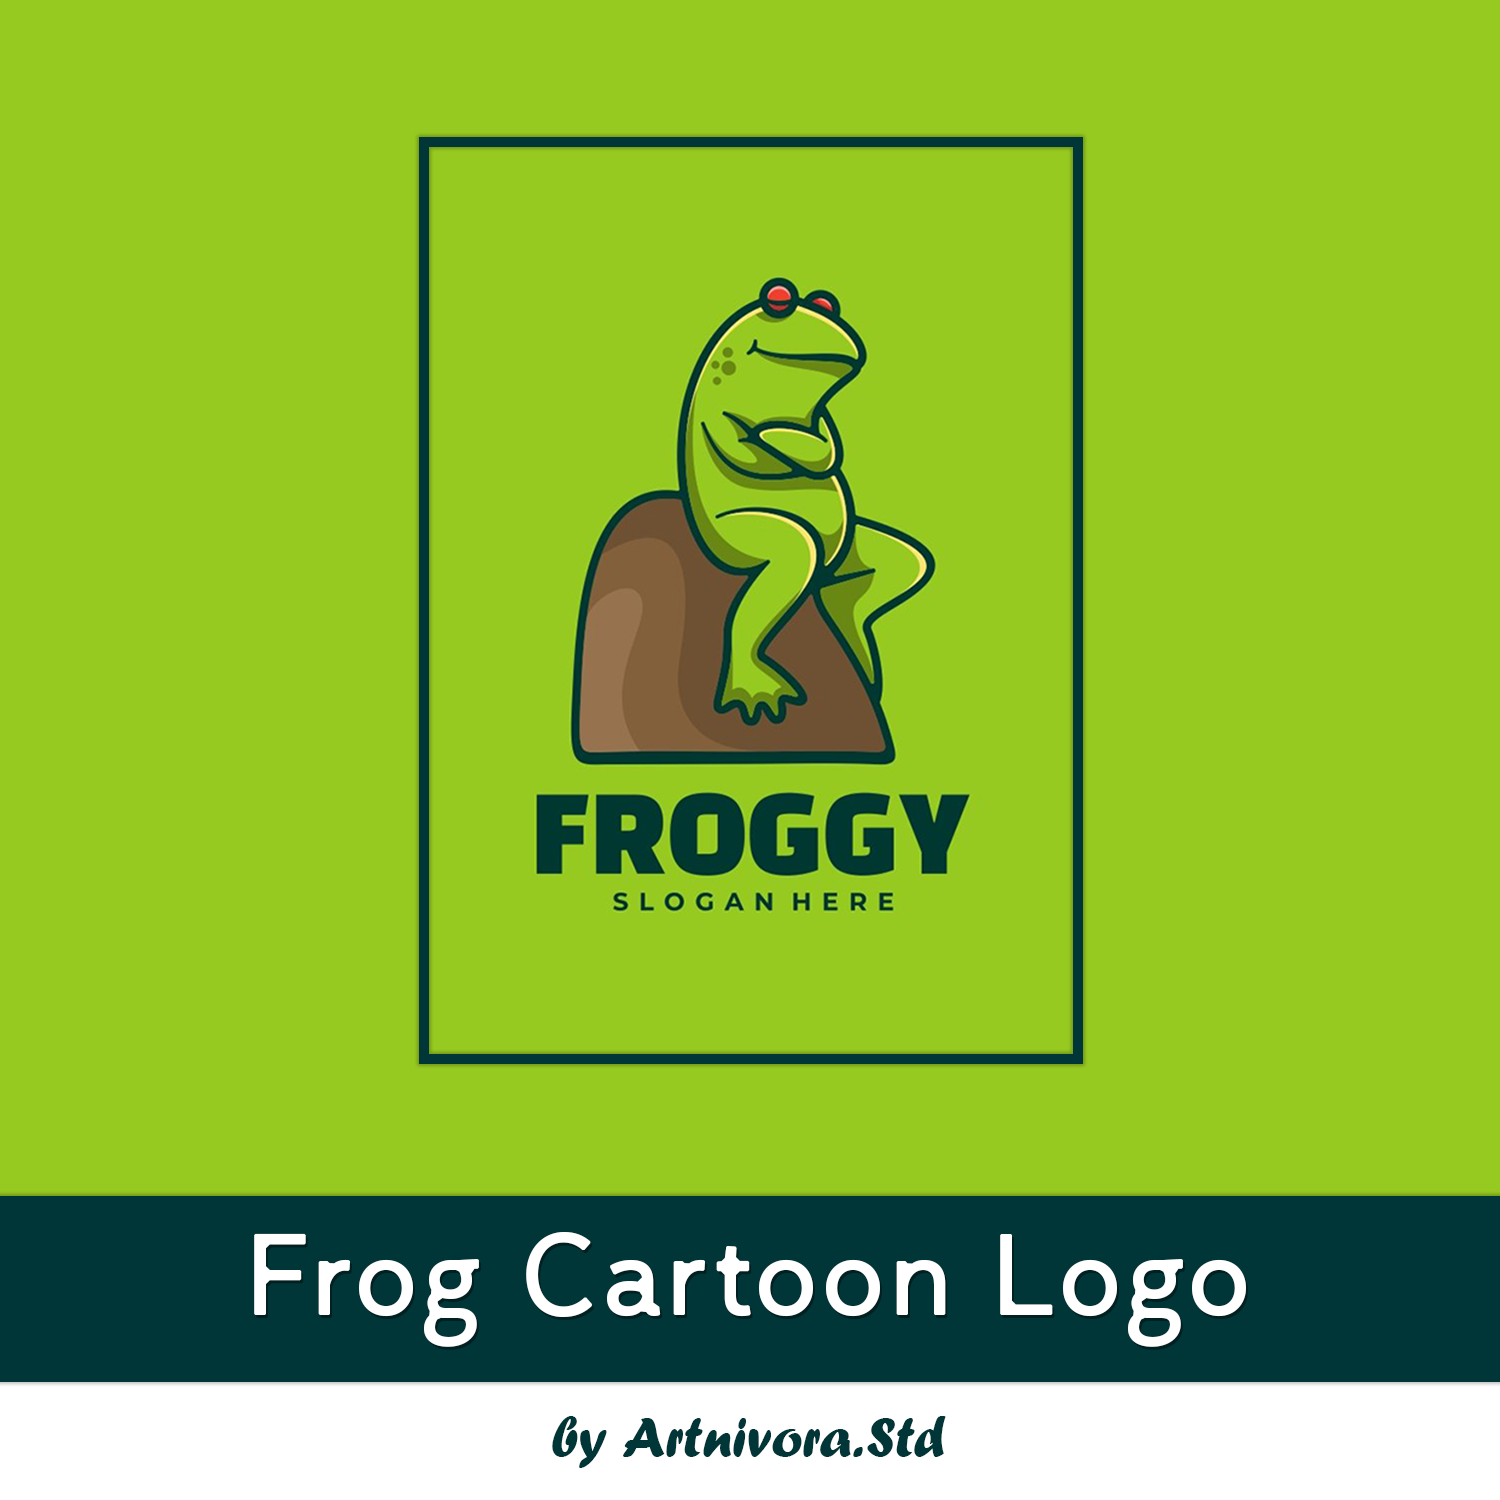 Frog Cartoon Logo cover.